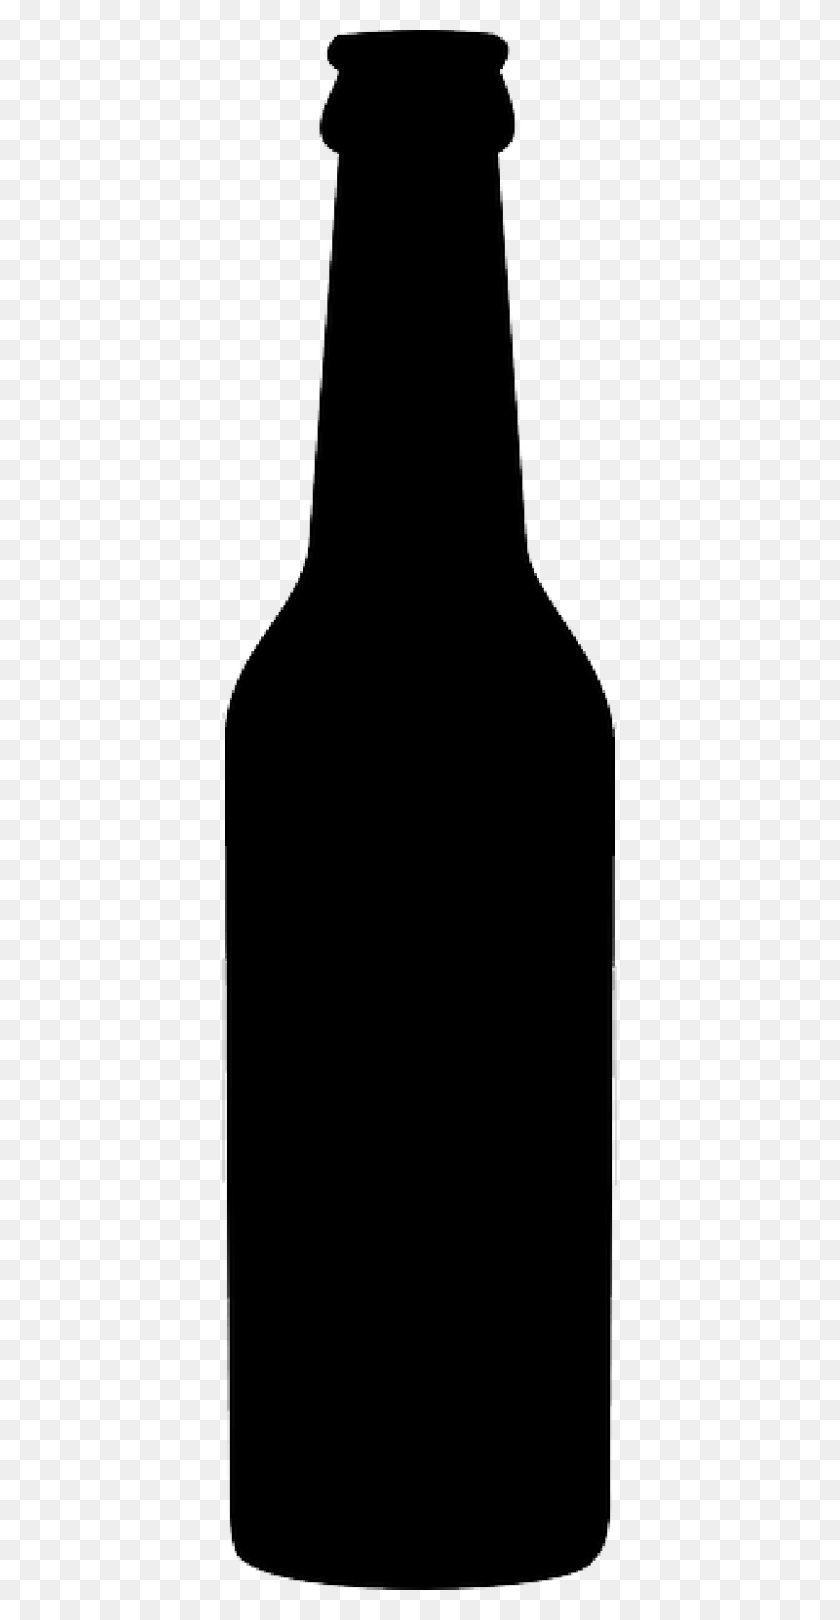 800x1600 Beer Bottle Clip Art - Bottle Clipart PNG